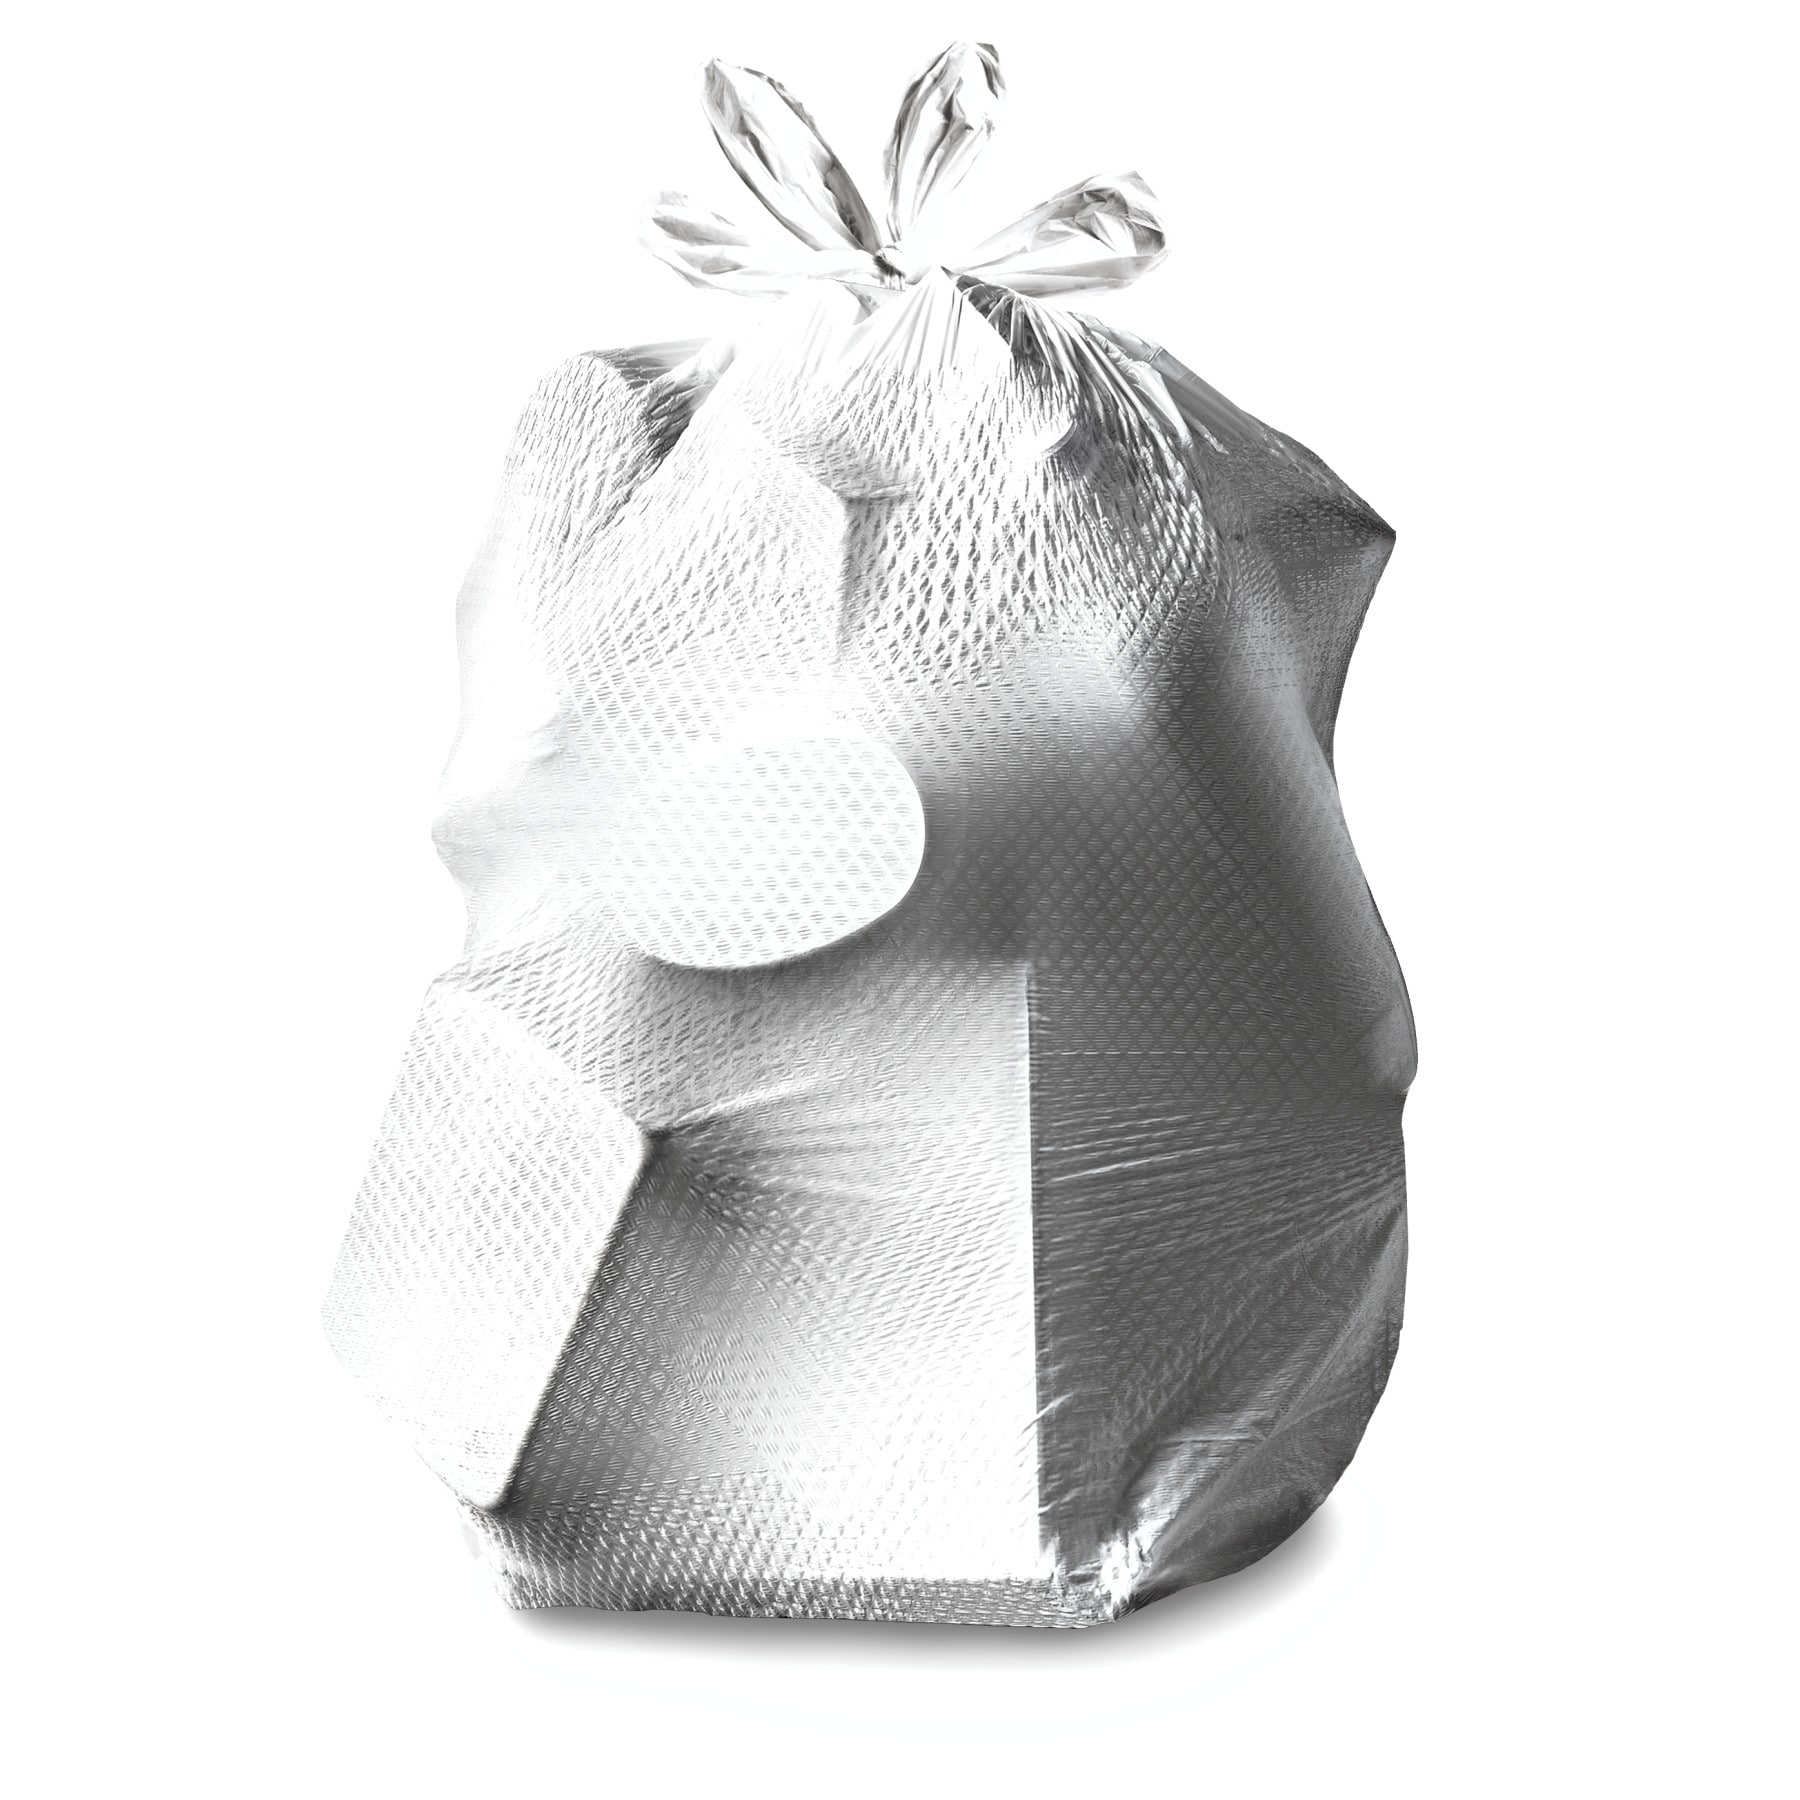 Tuff Bros Trash Bag, White, 8 Gallon, 18 Count (24 Pack)